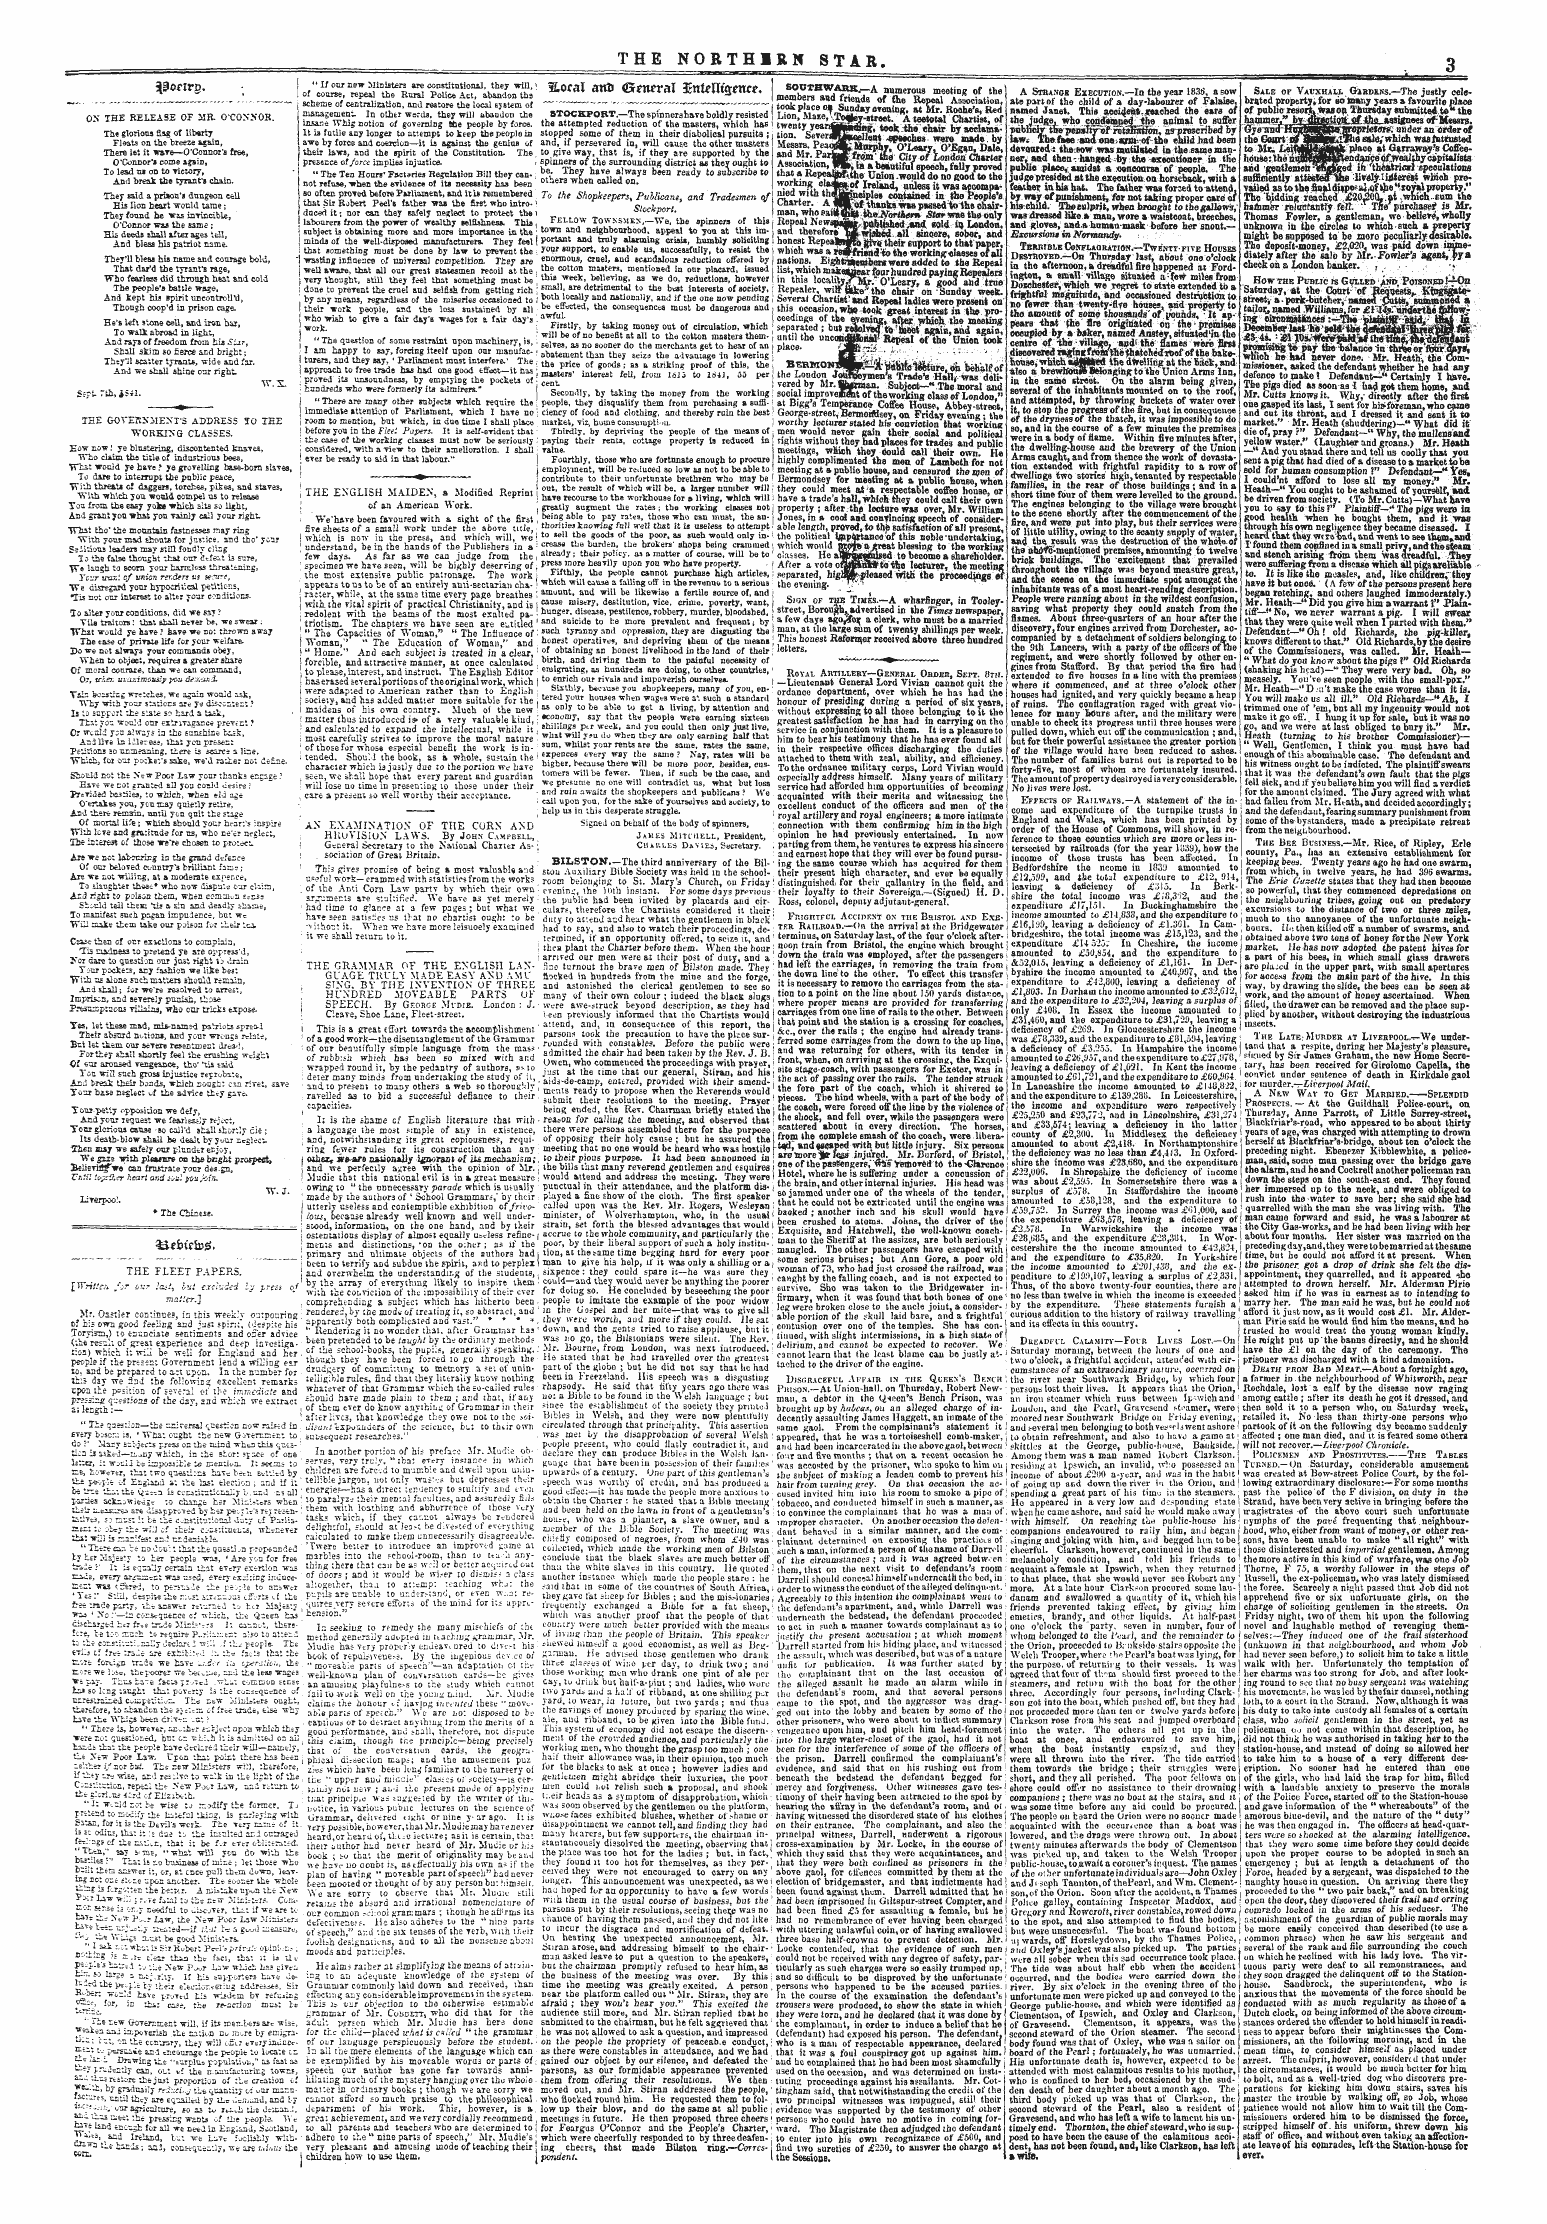 Northern Star (1837-1852): jS F Y, 3rd edition - Horal An& &Tnevtil 32ntexlig^Ence*